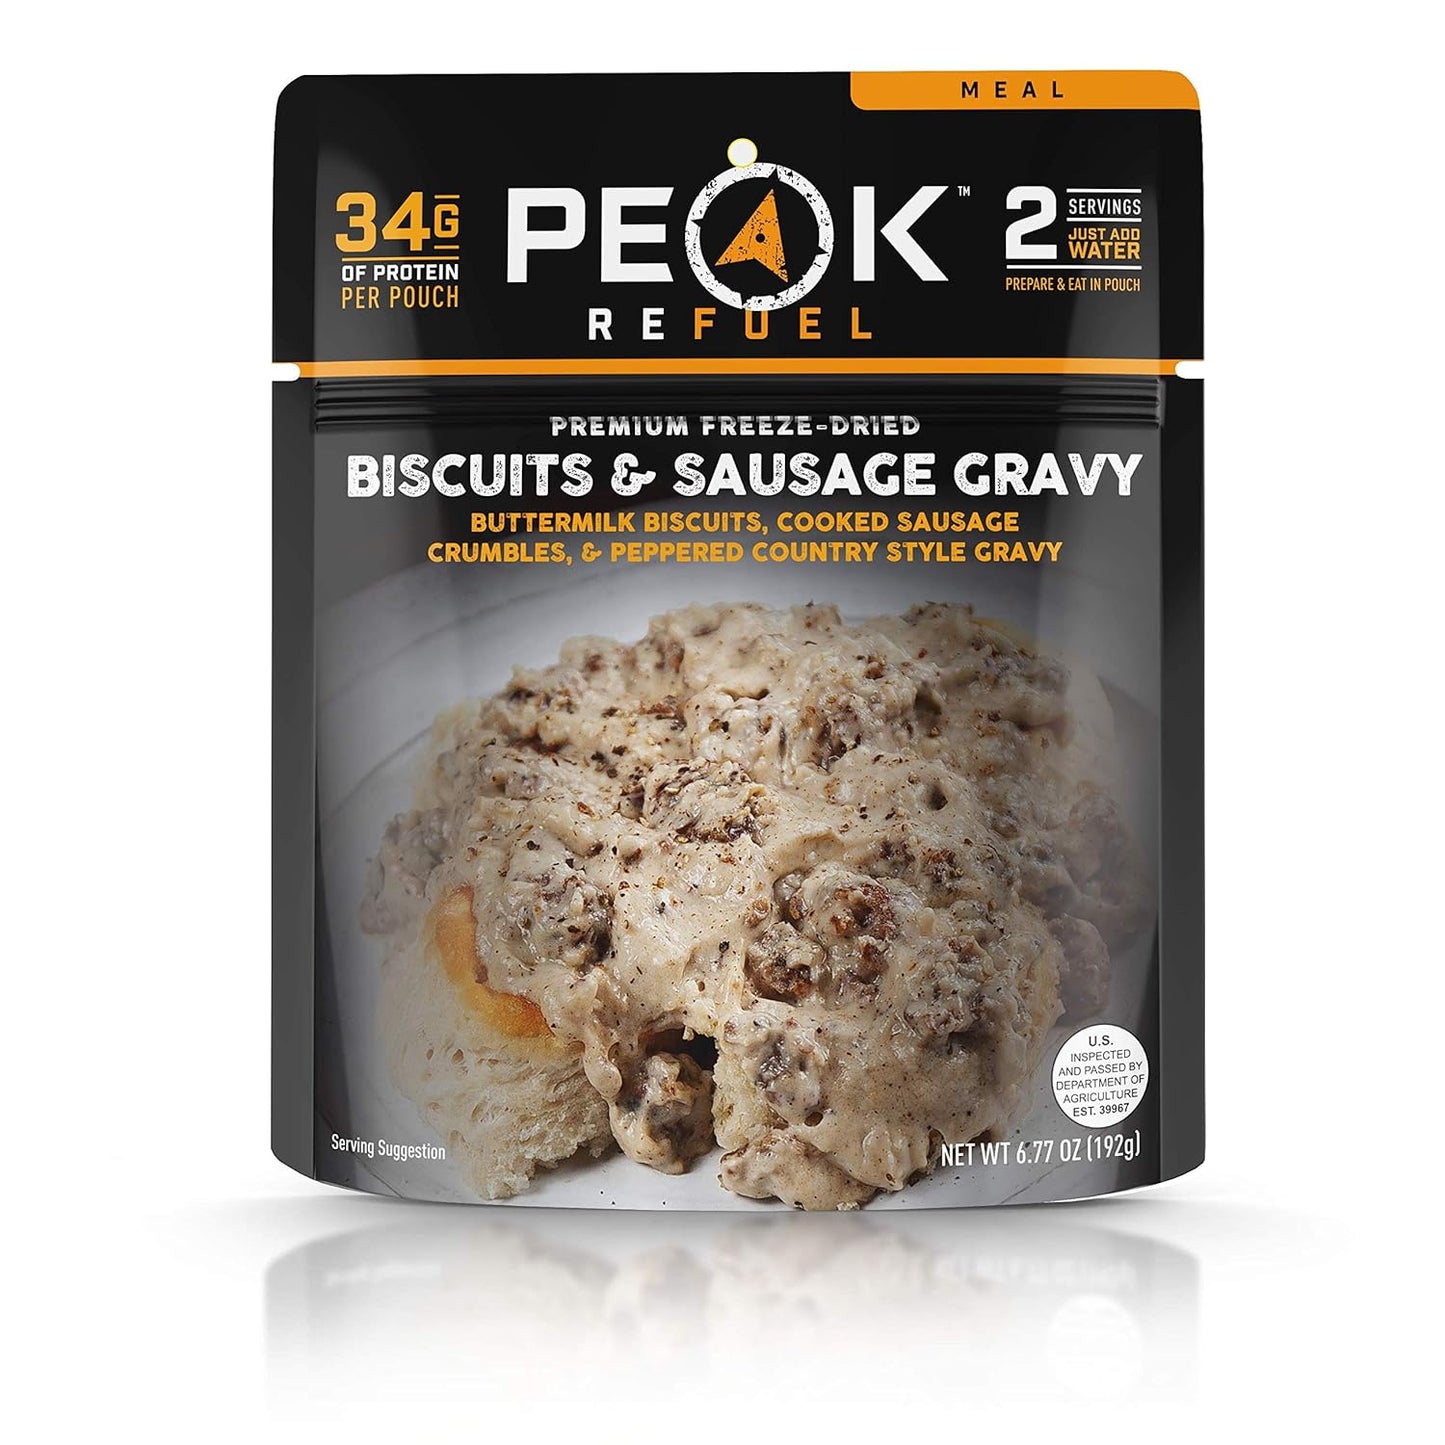 Peak Refuel Biscuits and Sausage Gravy